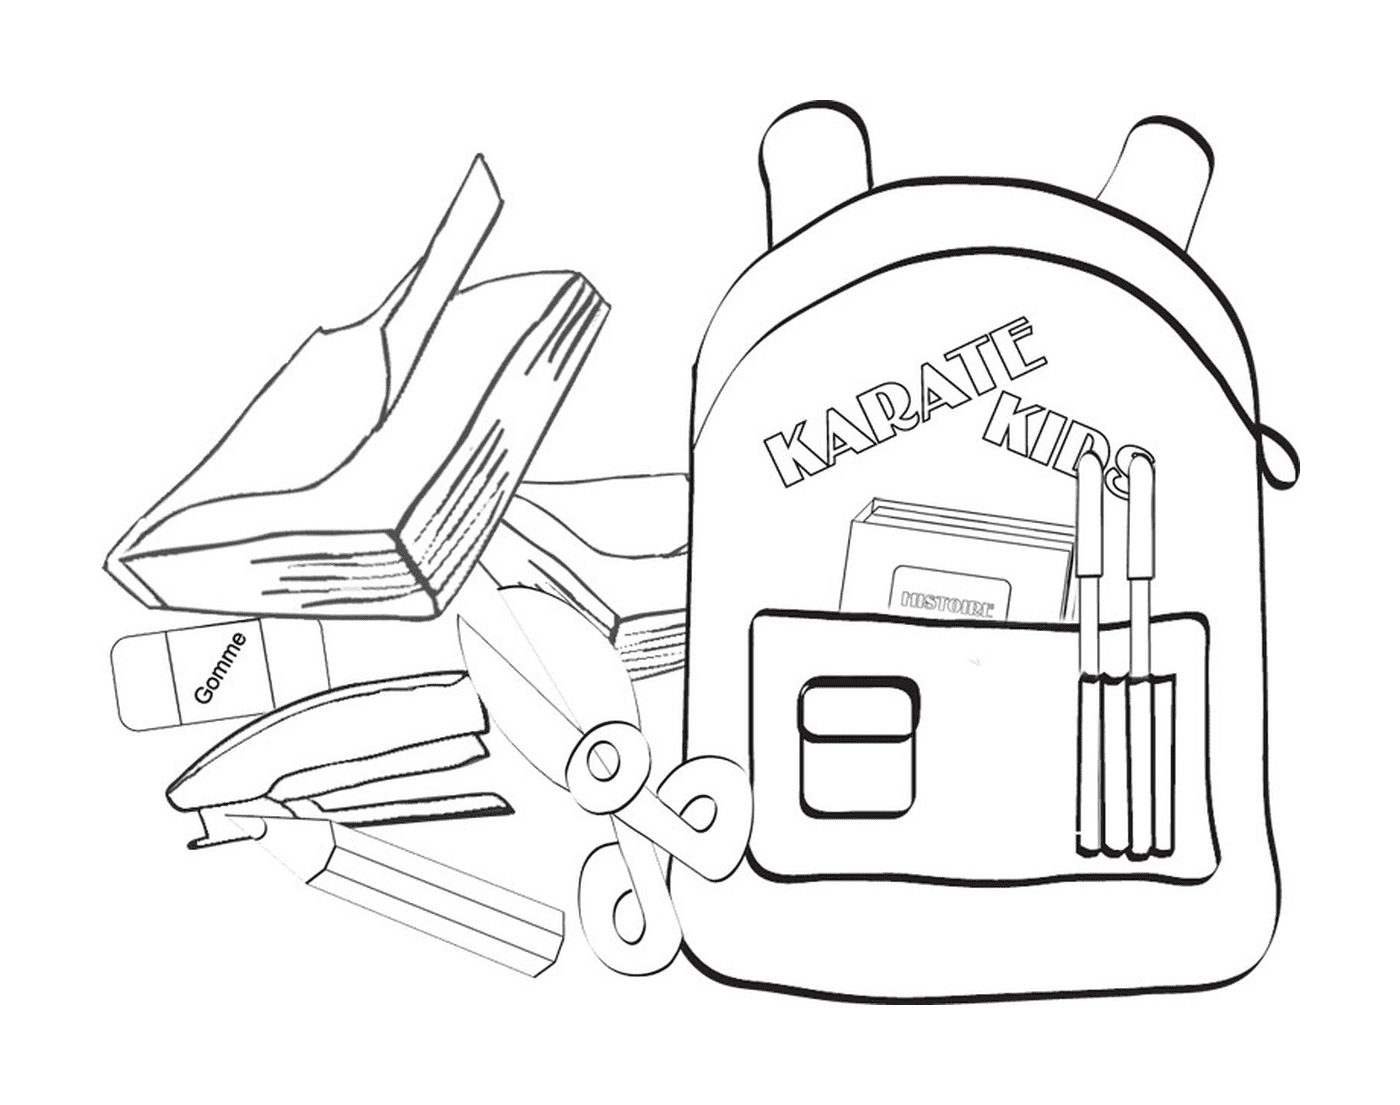  School bags and school supplies 